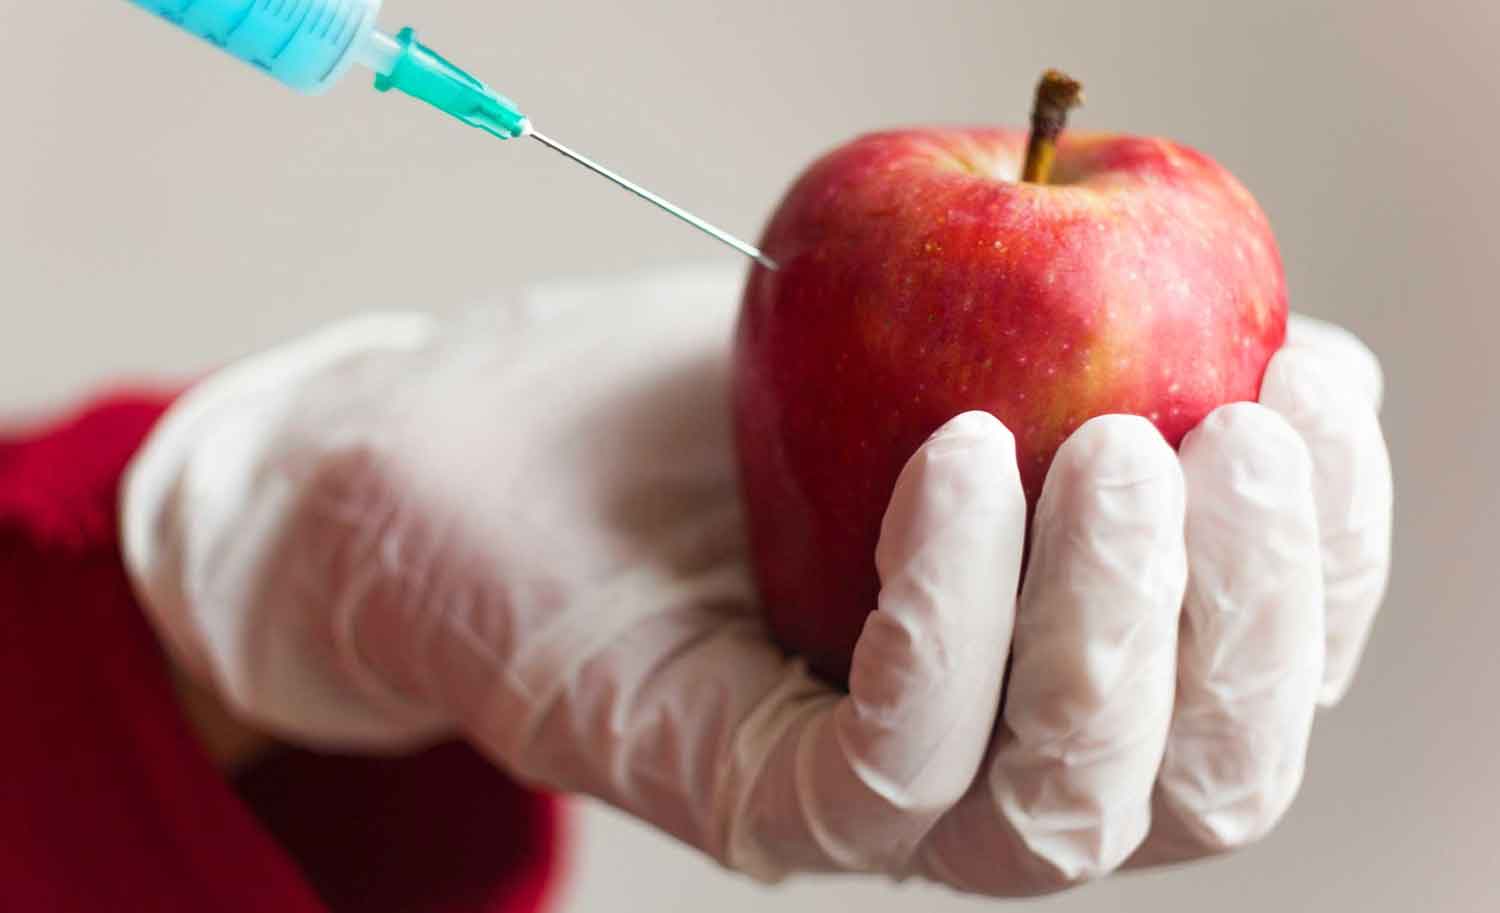 GMO ALARM: Dangers, benefits of genetically modified foods